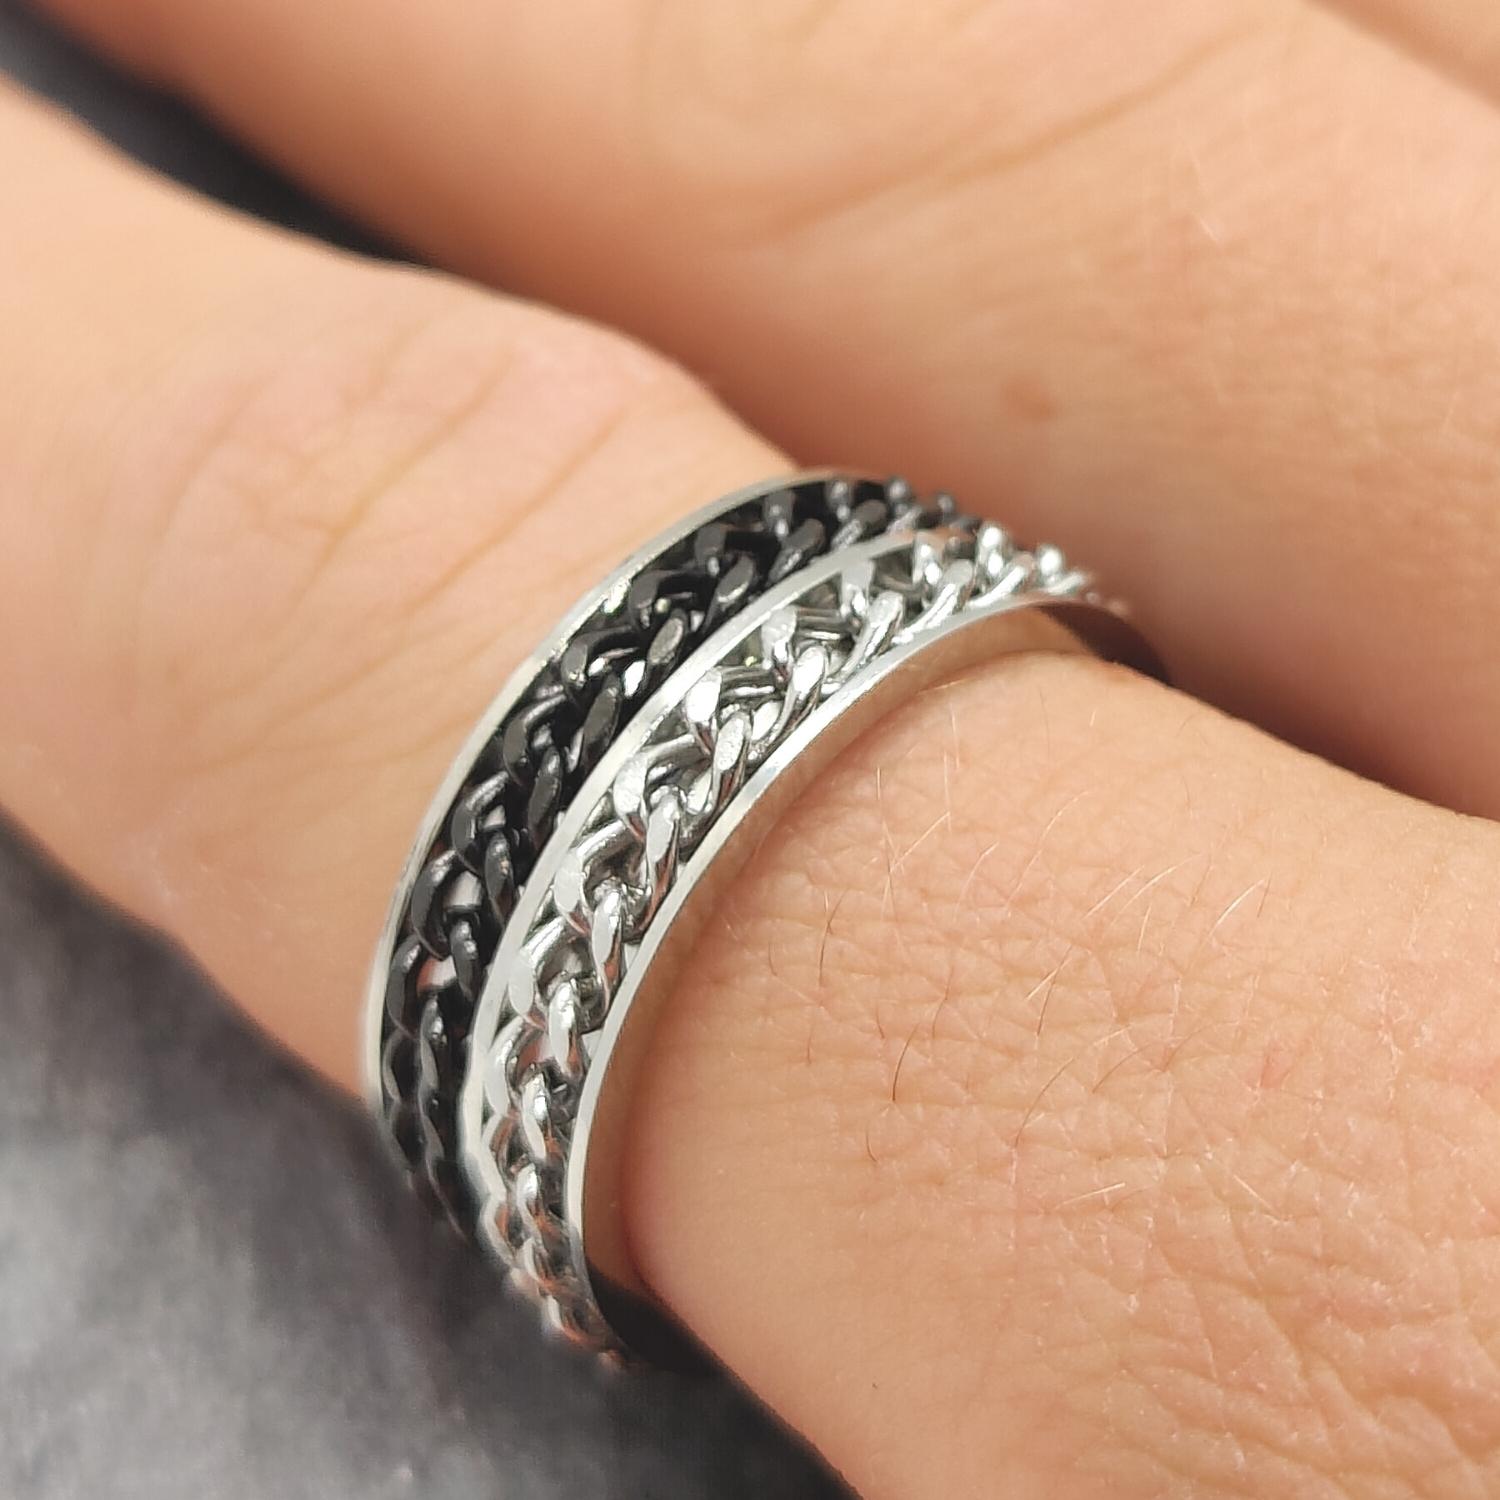 Anxiety Ring (Dubbele Ketting) Zwart-Zilver om vinger